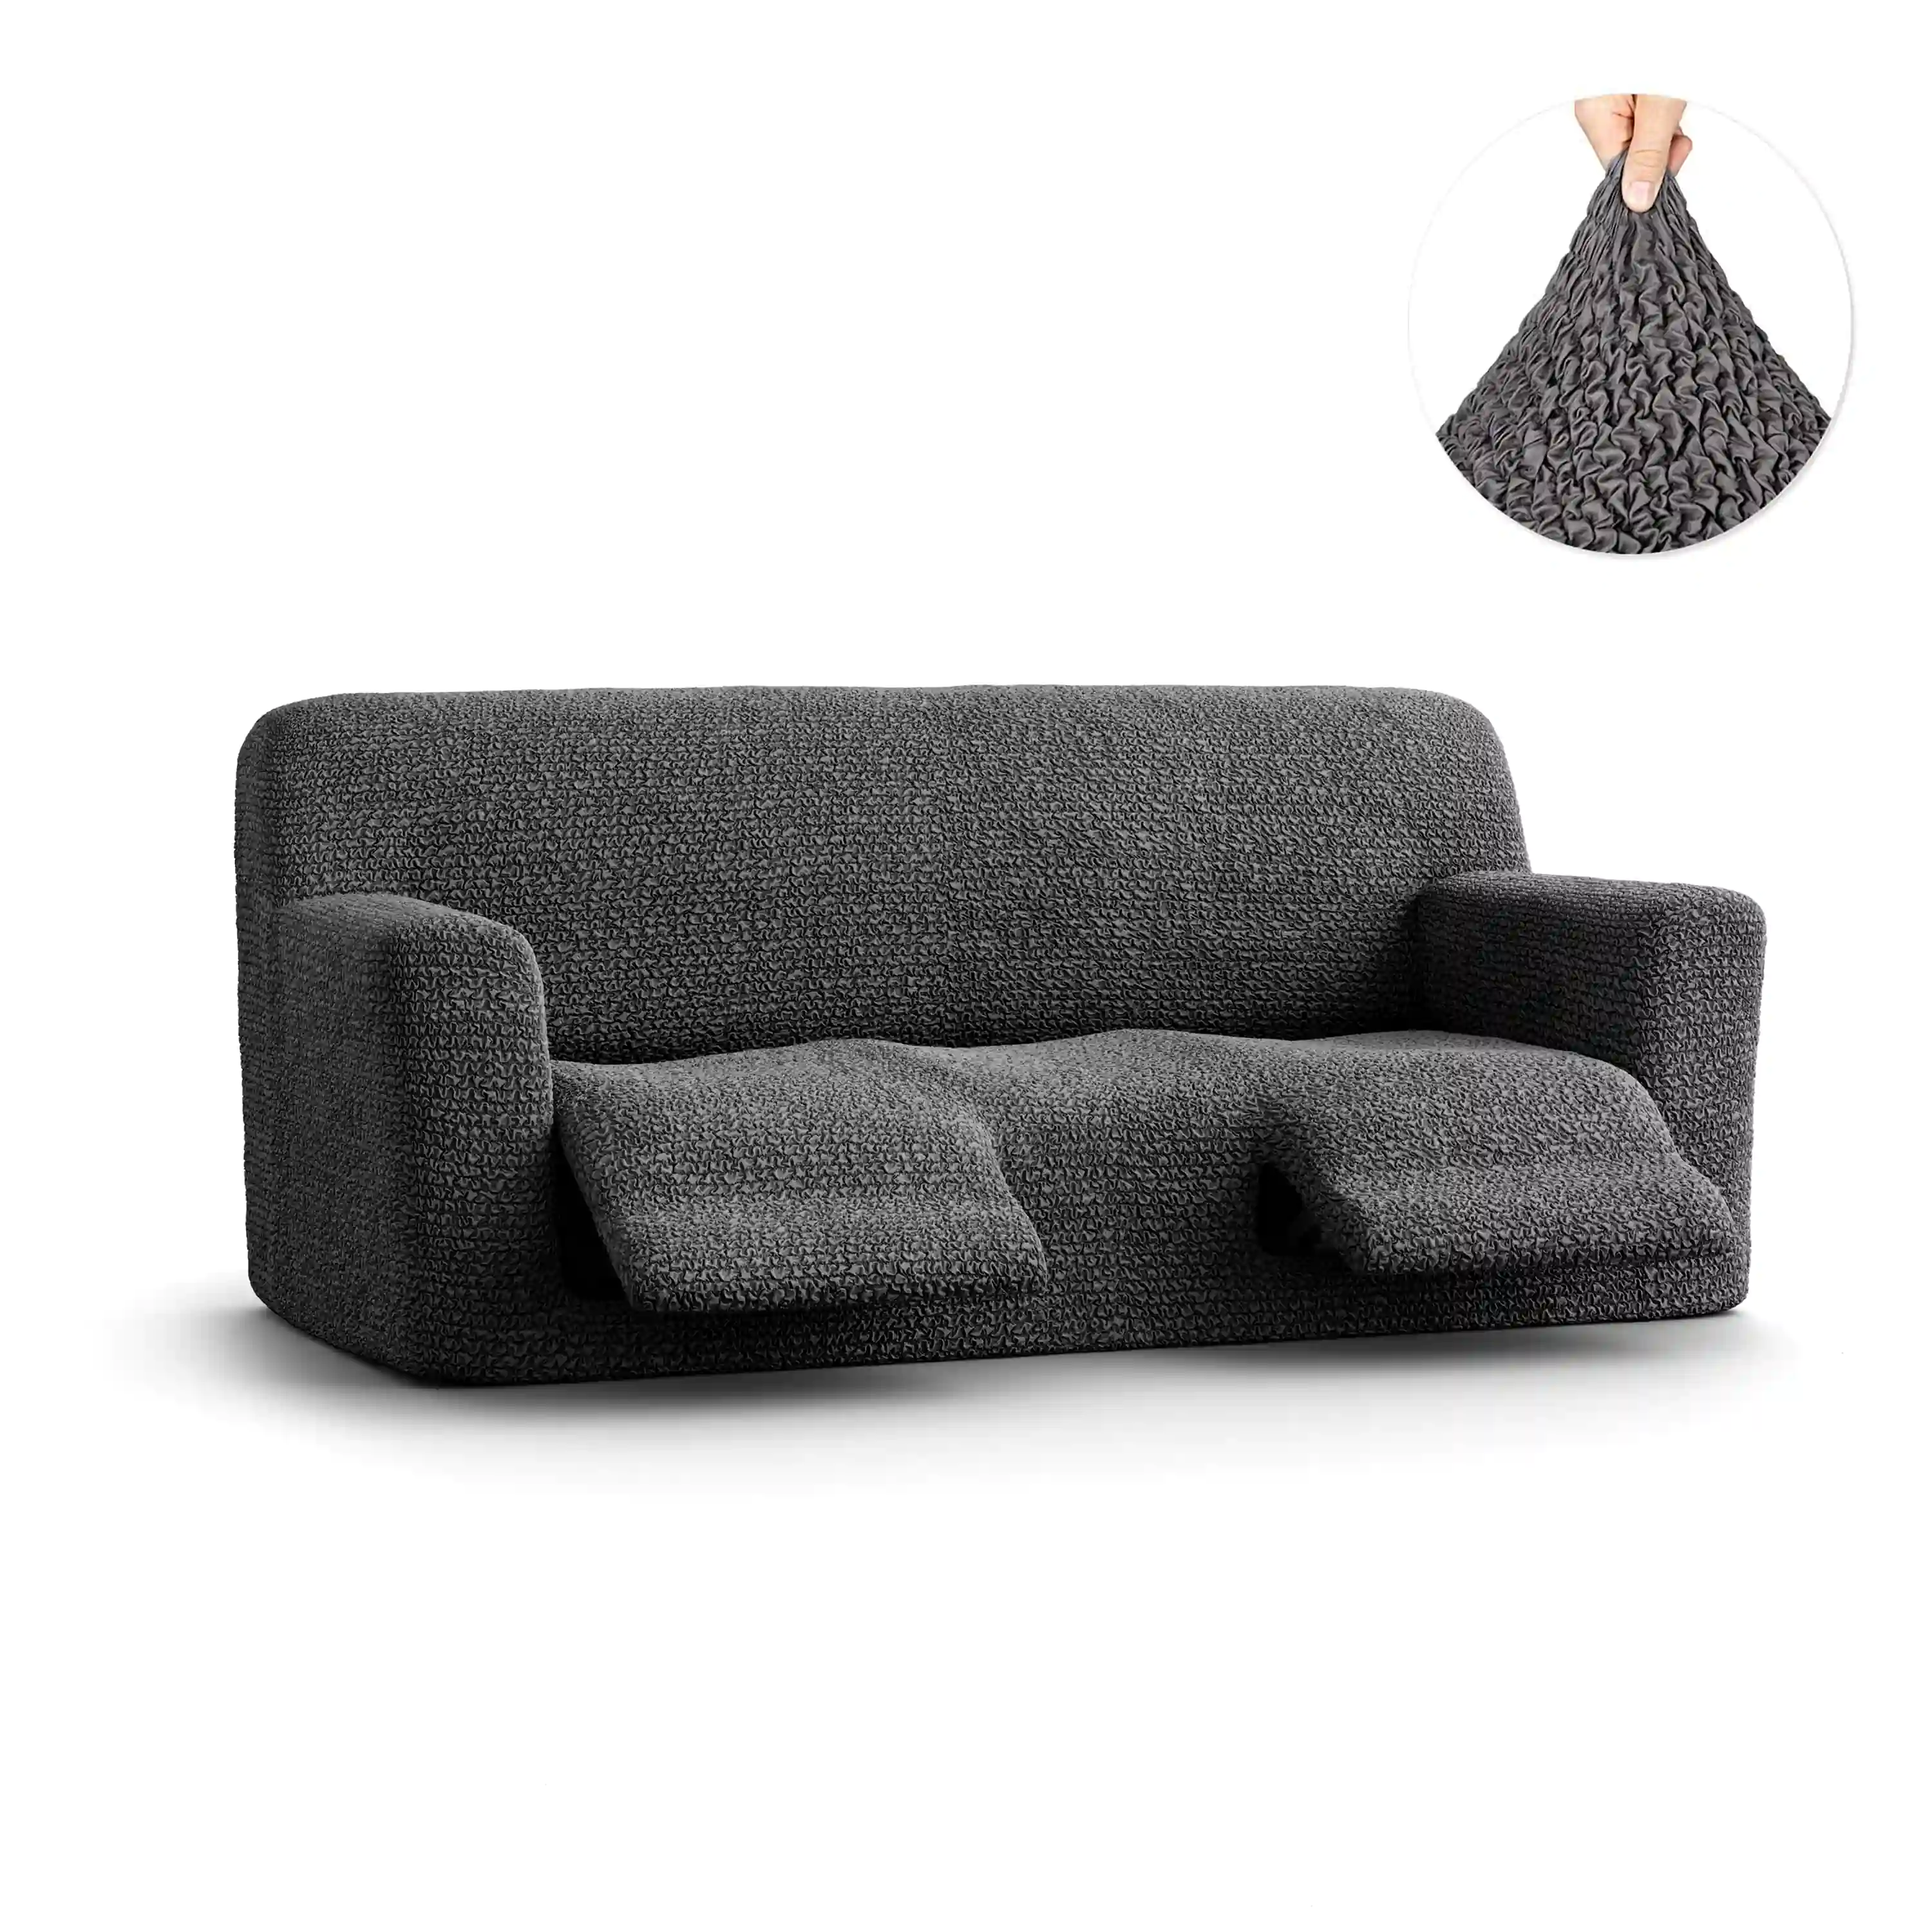 3 Seater Recliner Sofa Cover - Charcoal, Microfibra